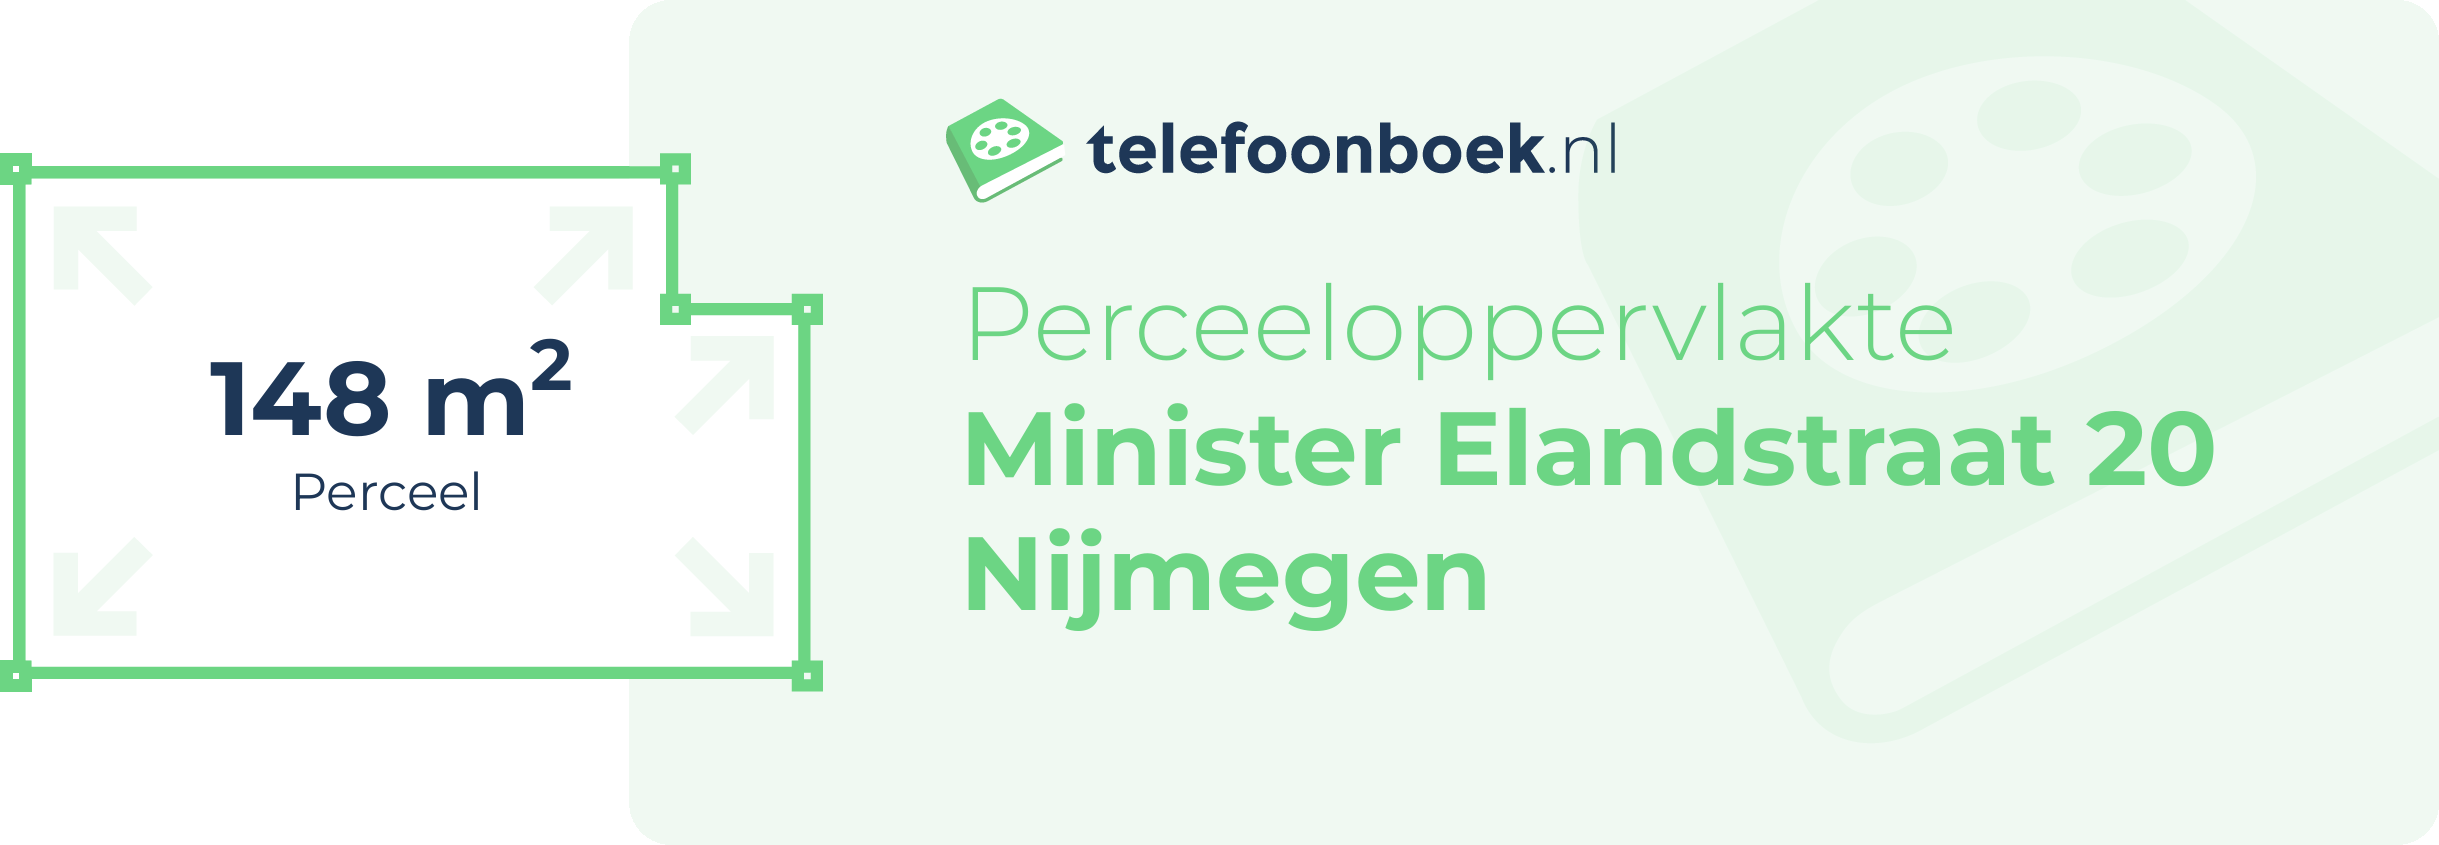 Perceeloppervlakte Minister Elandstraat 20 Nijmegen